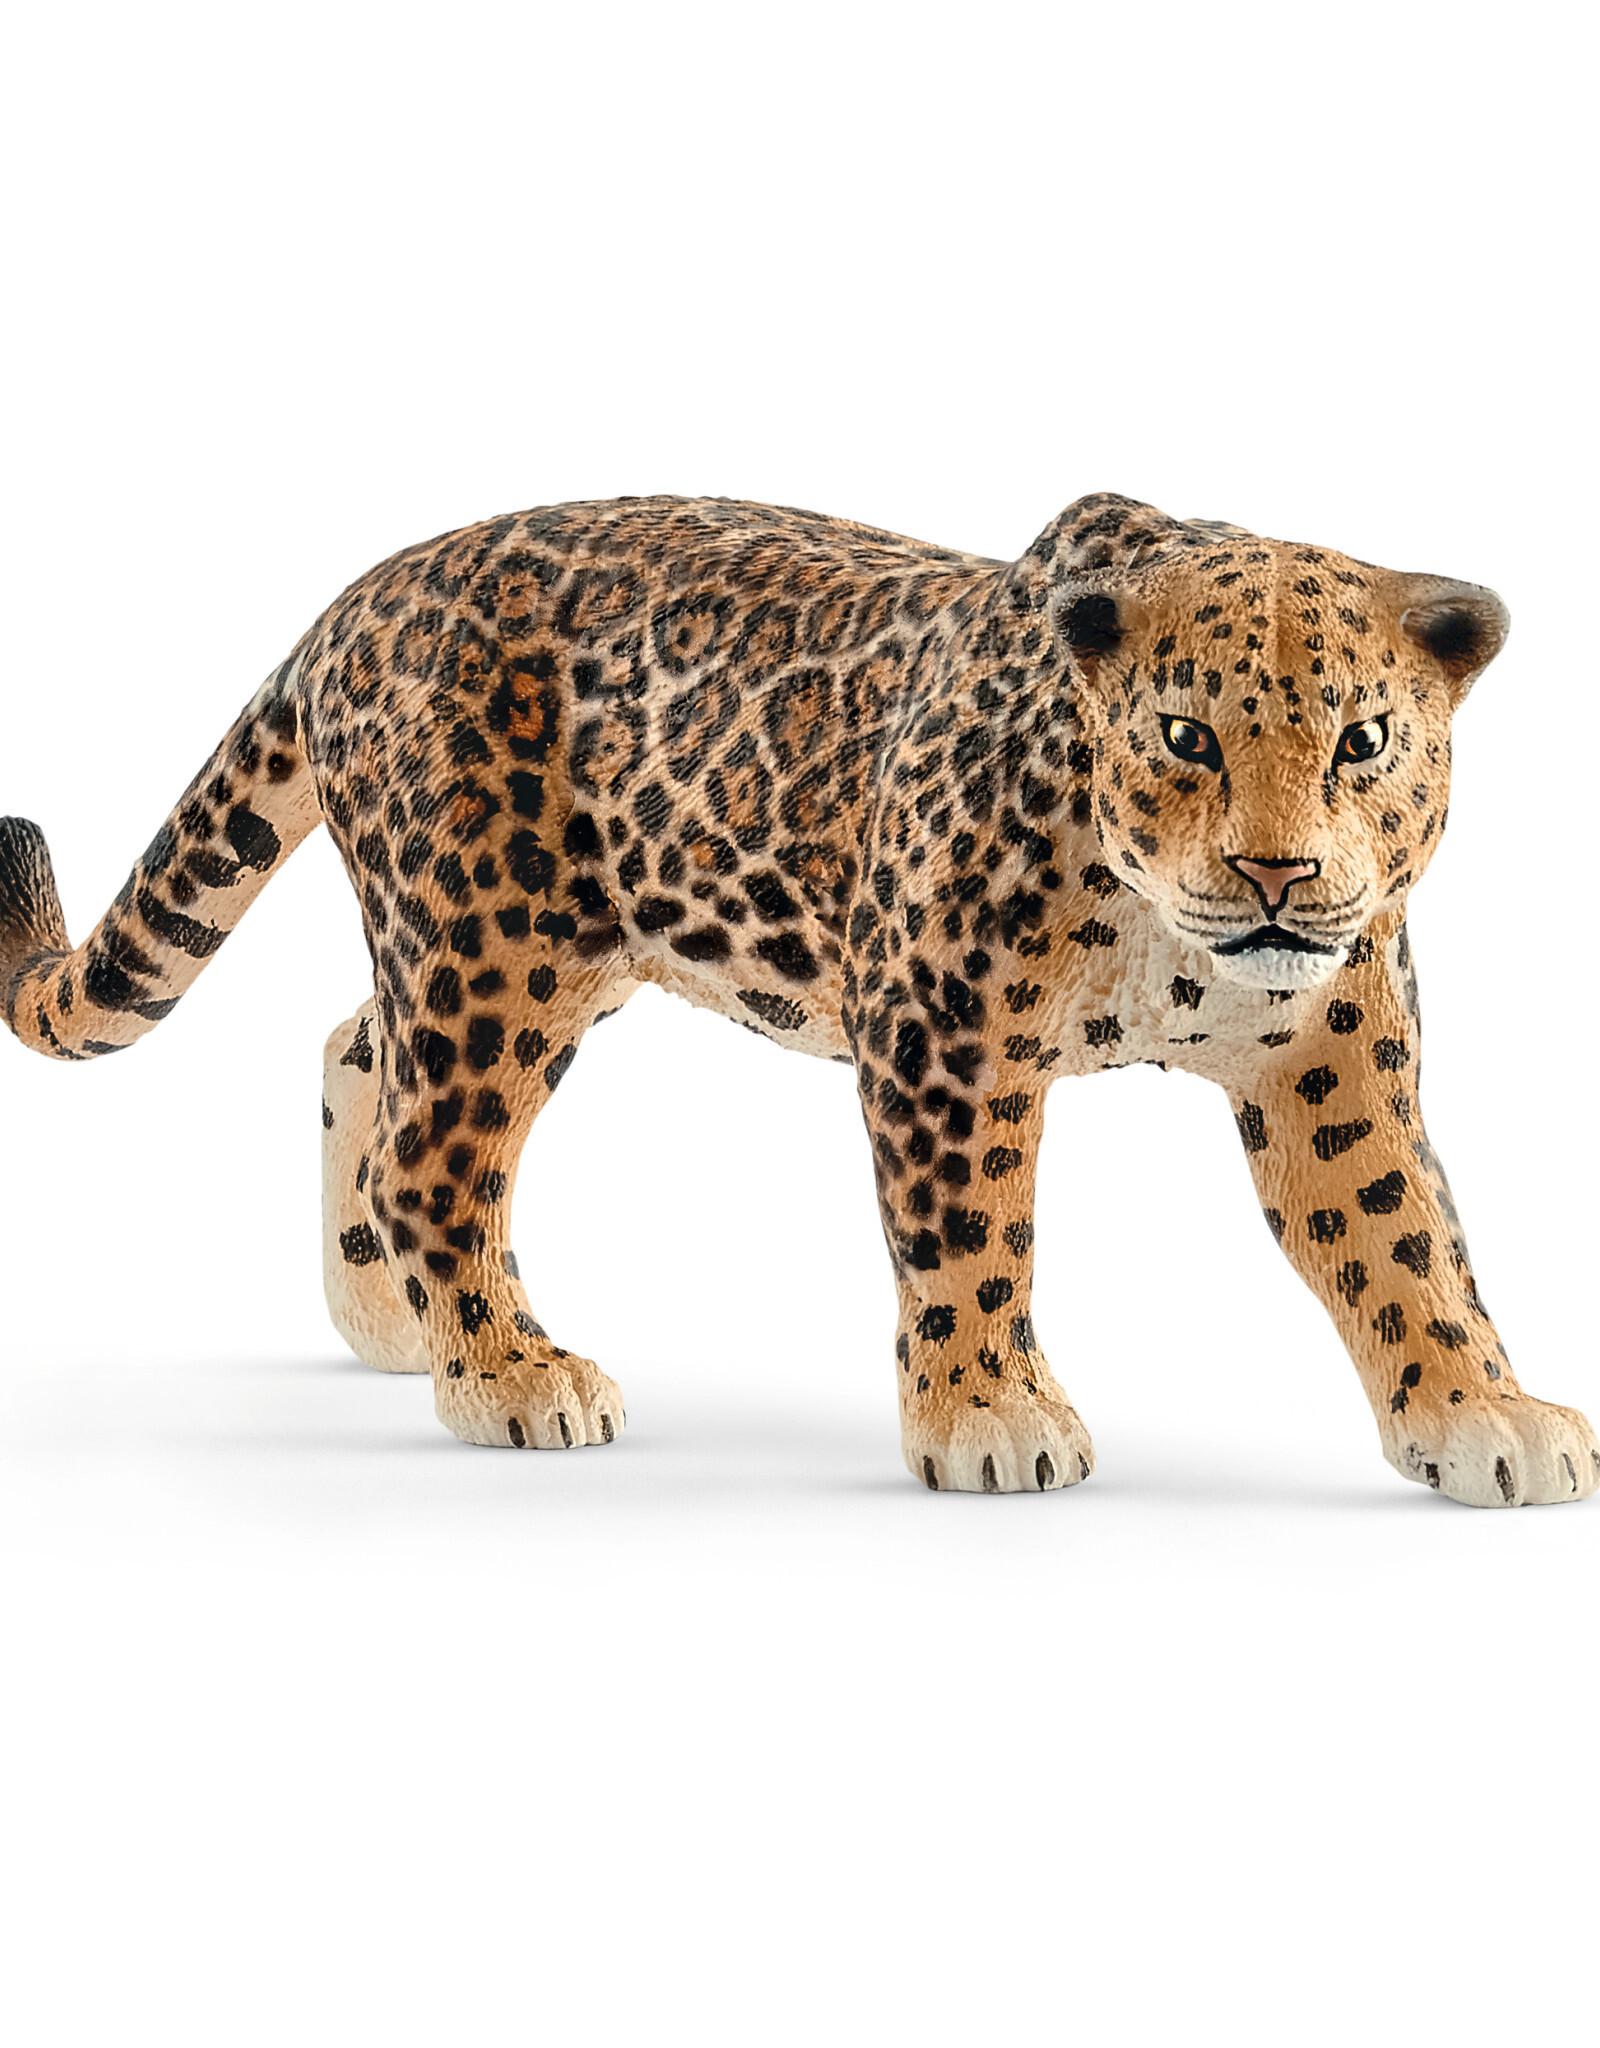 SCHLEICH Jaguar